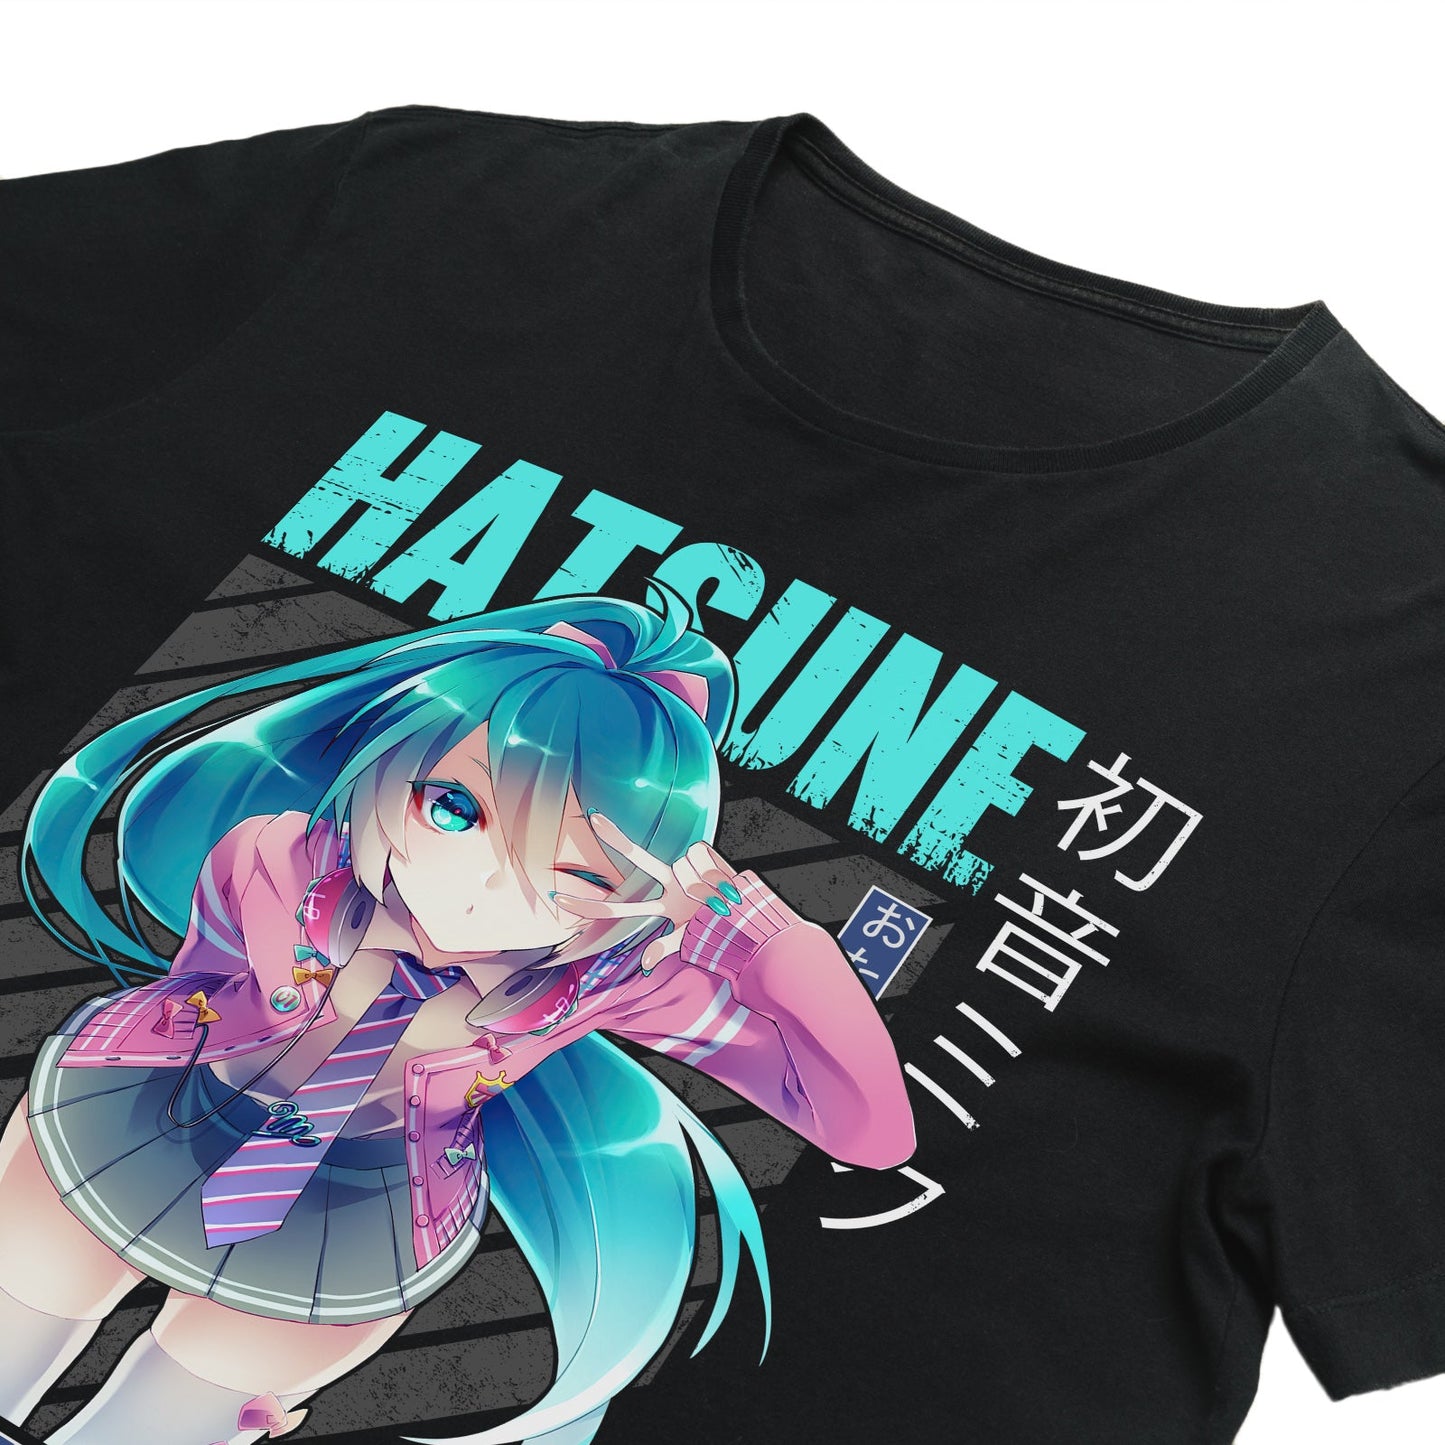 Camiseta Hatsune Miku Ver. 3